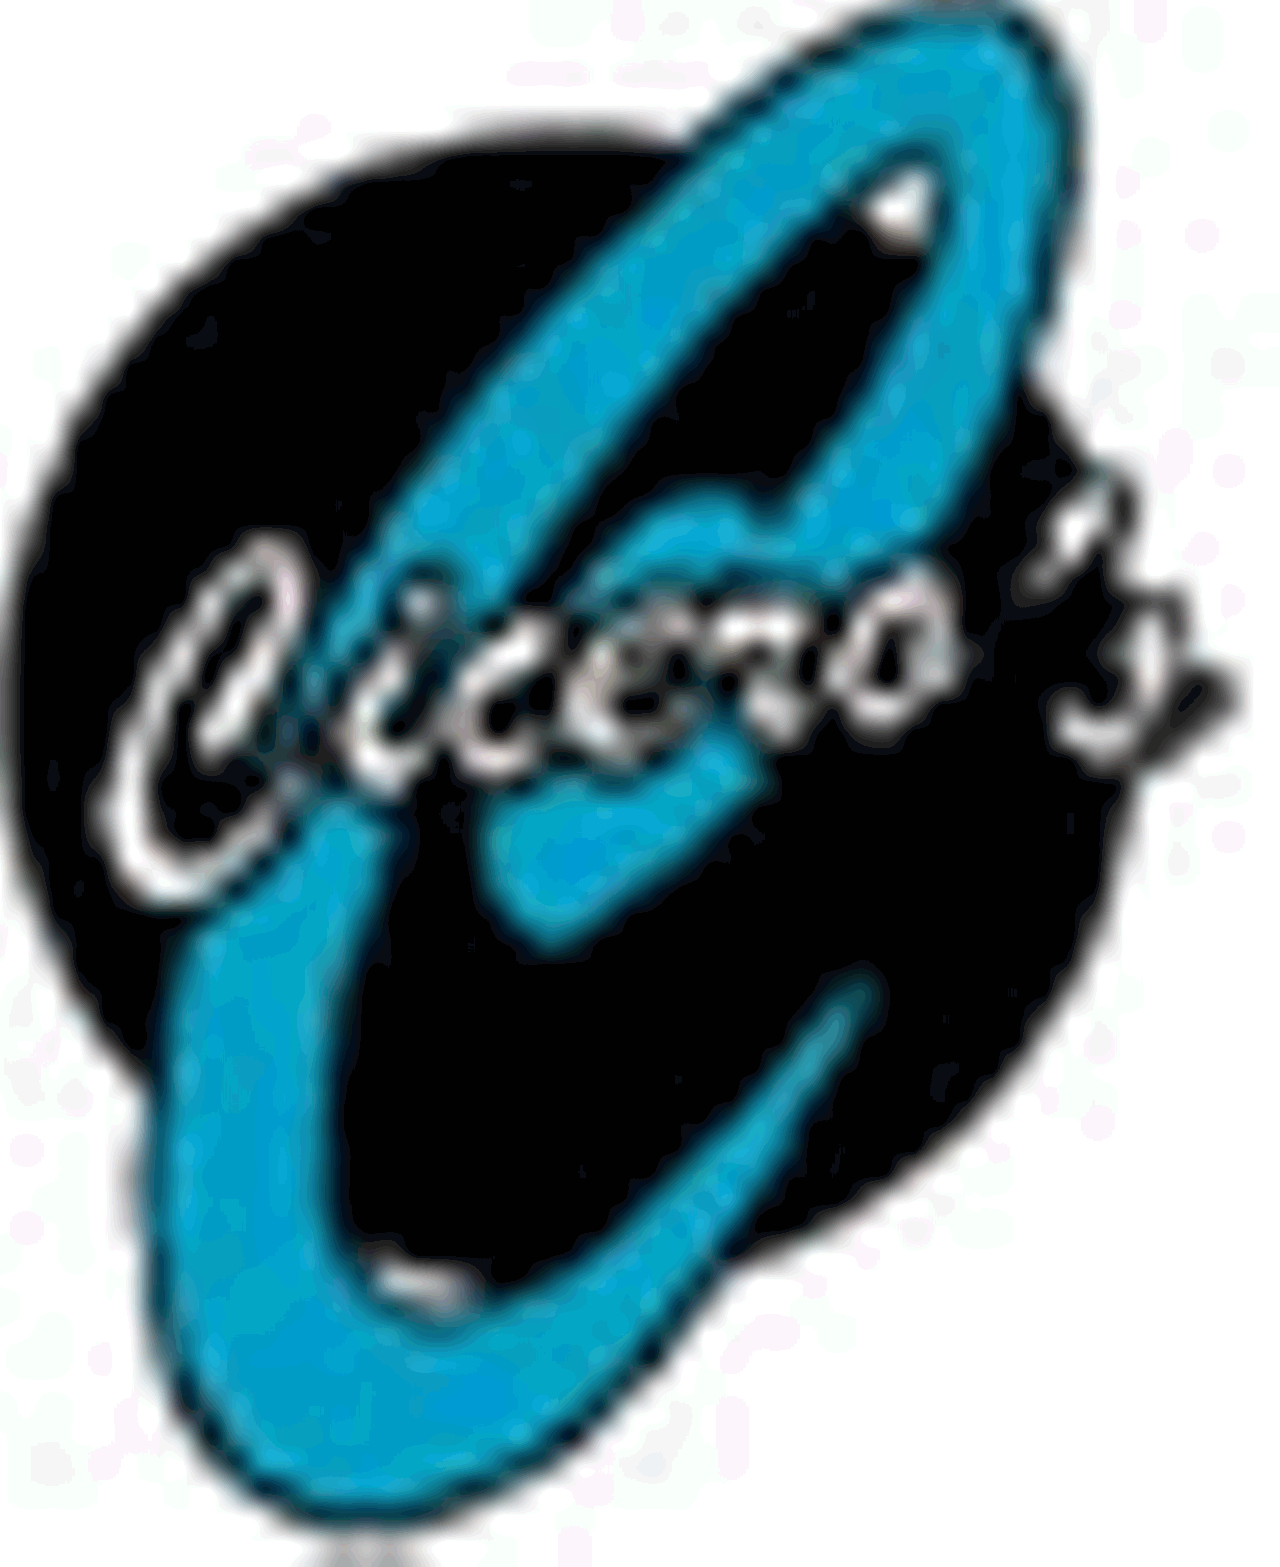 Cicero's